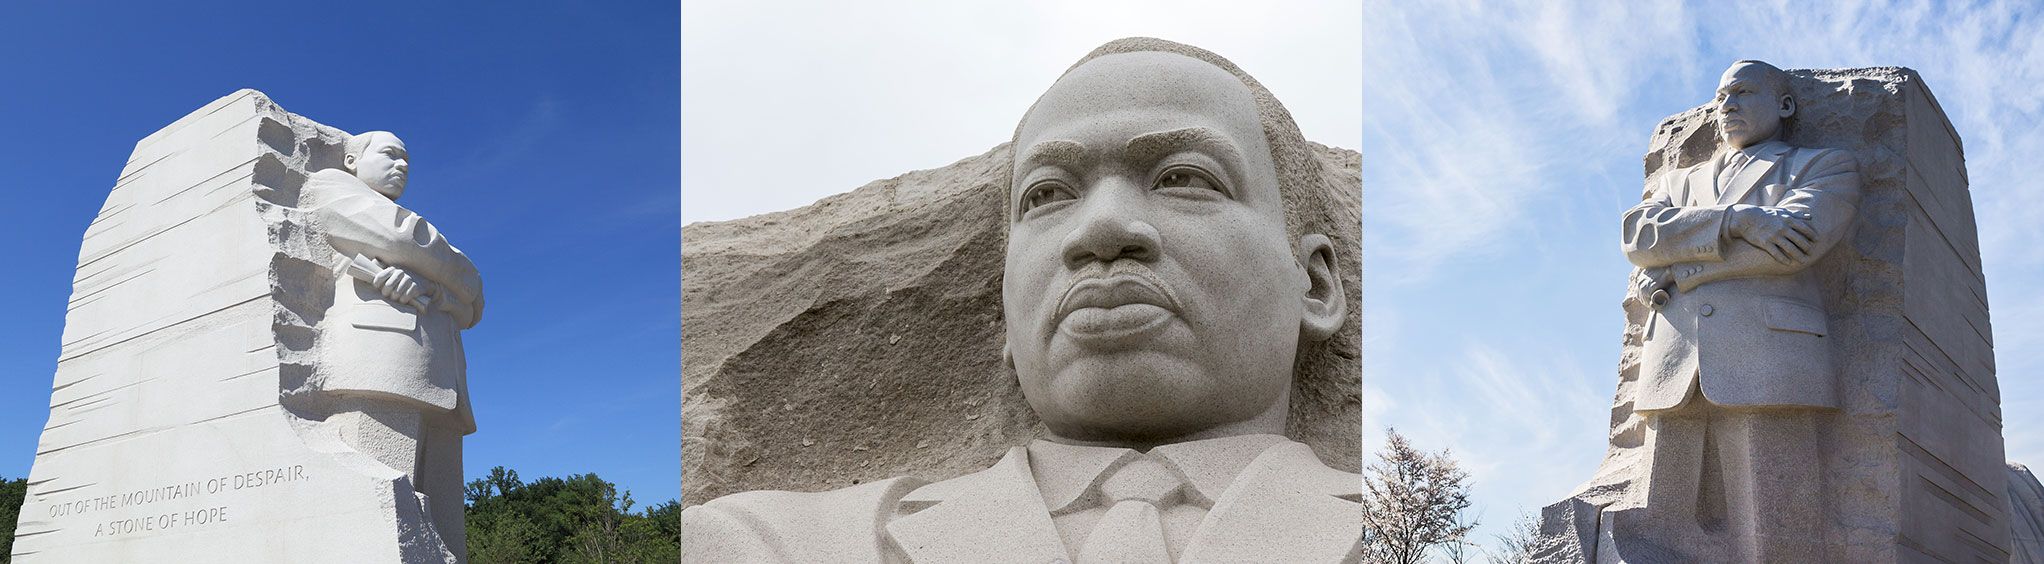 Dr. Martin Luther King Jr. National Memorial in Washington, D.C